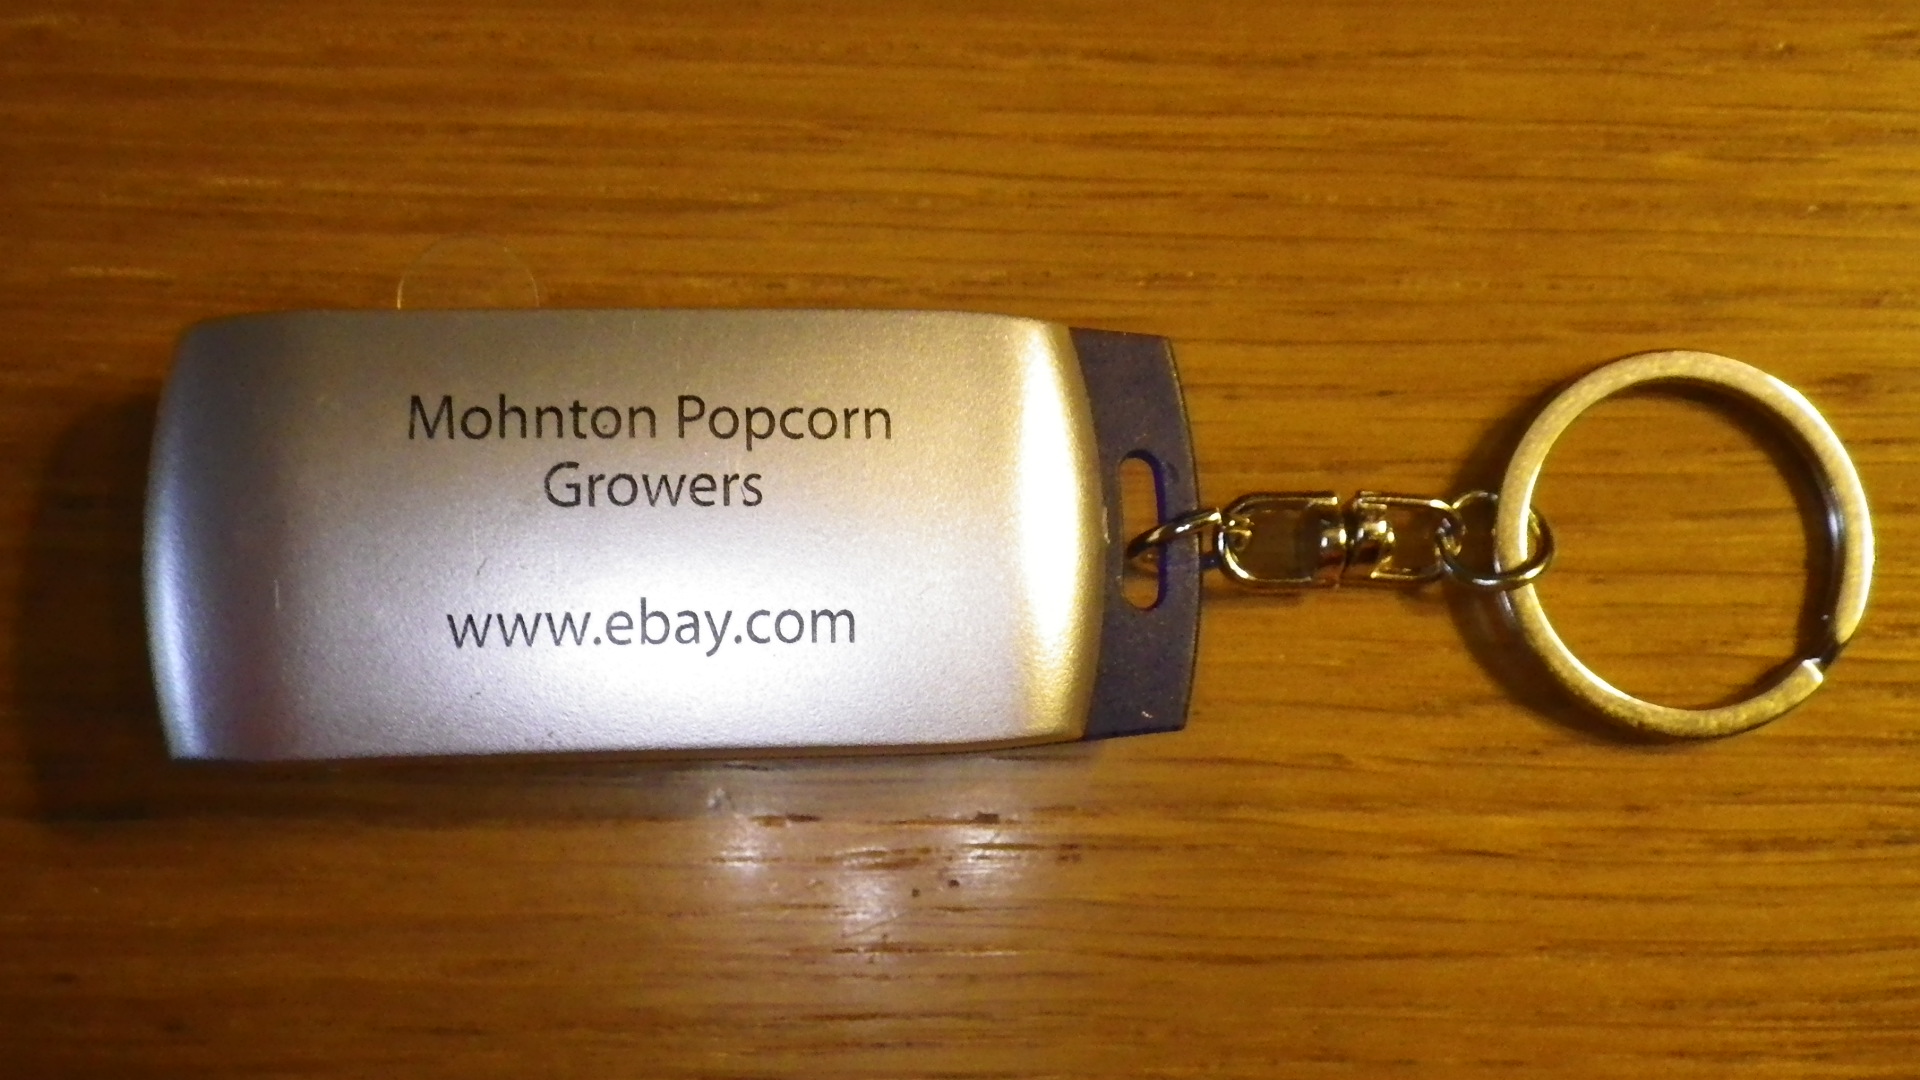 Mohnton Popcorn Growers Keychain